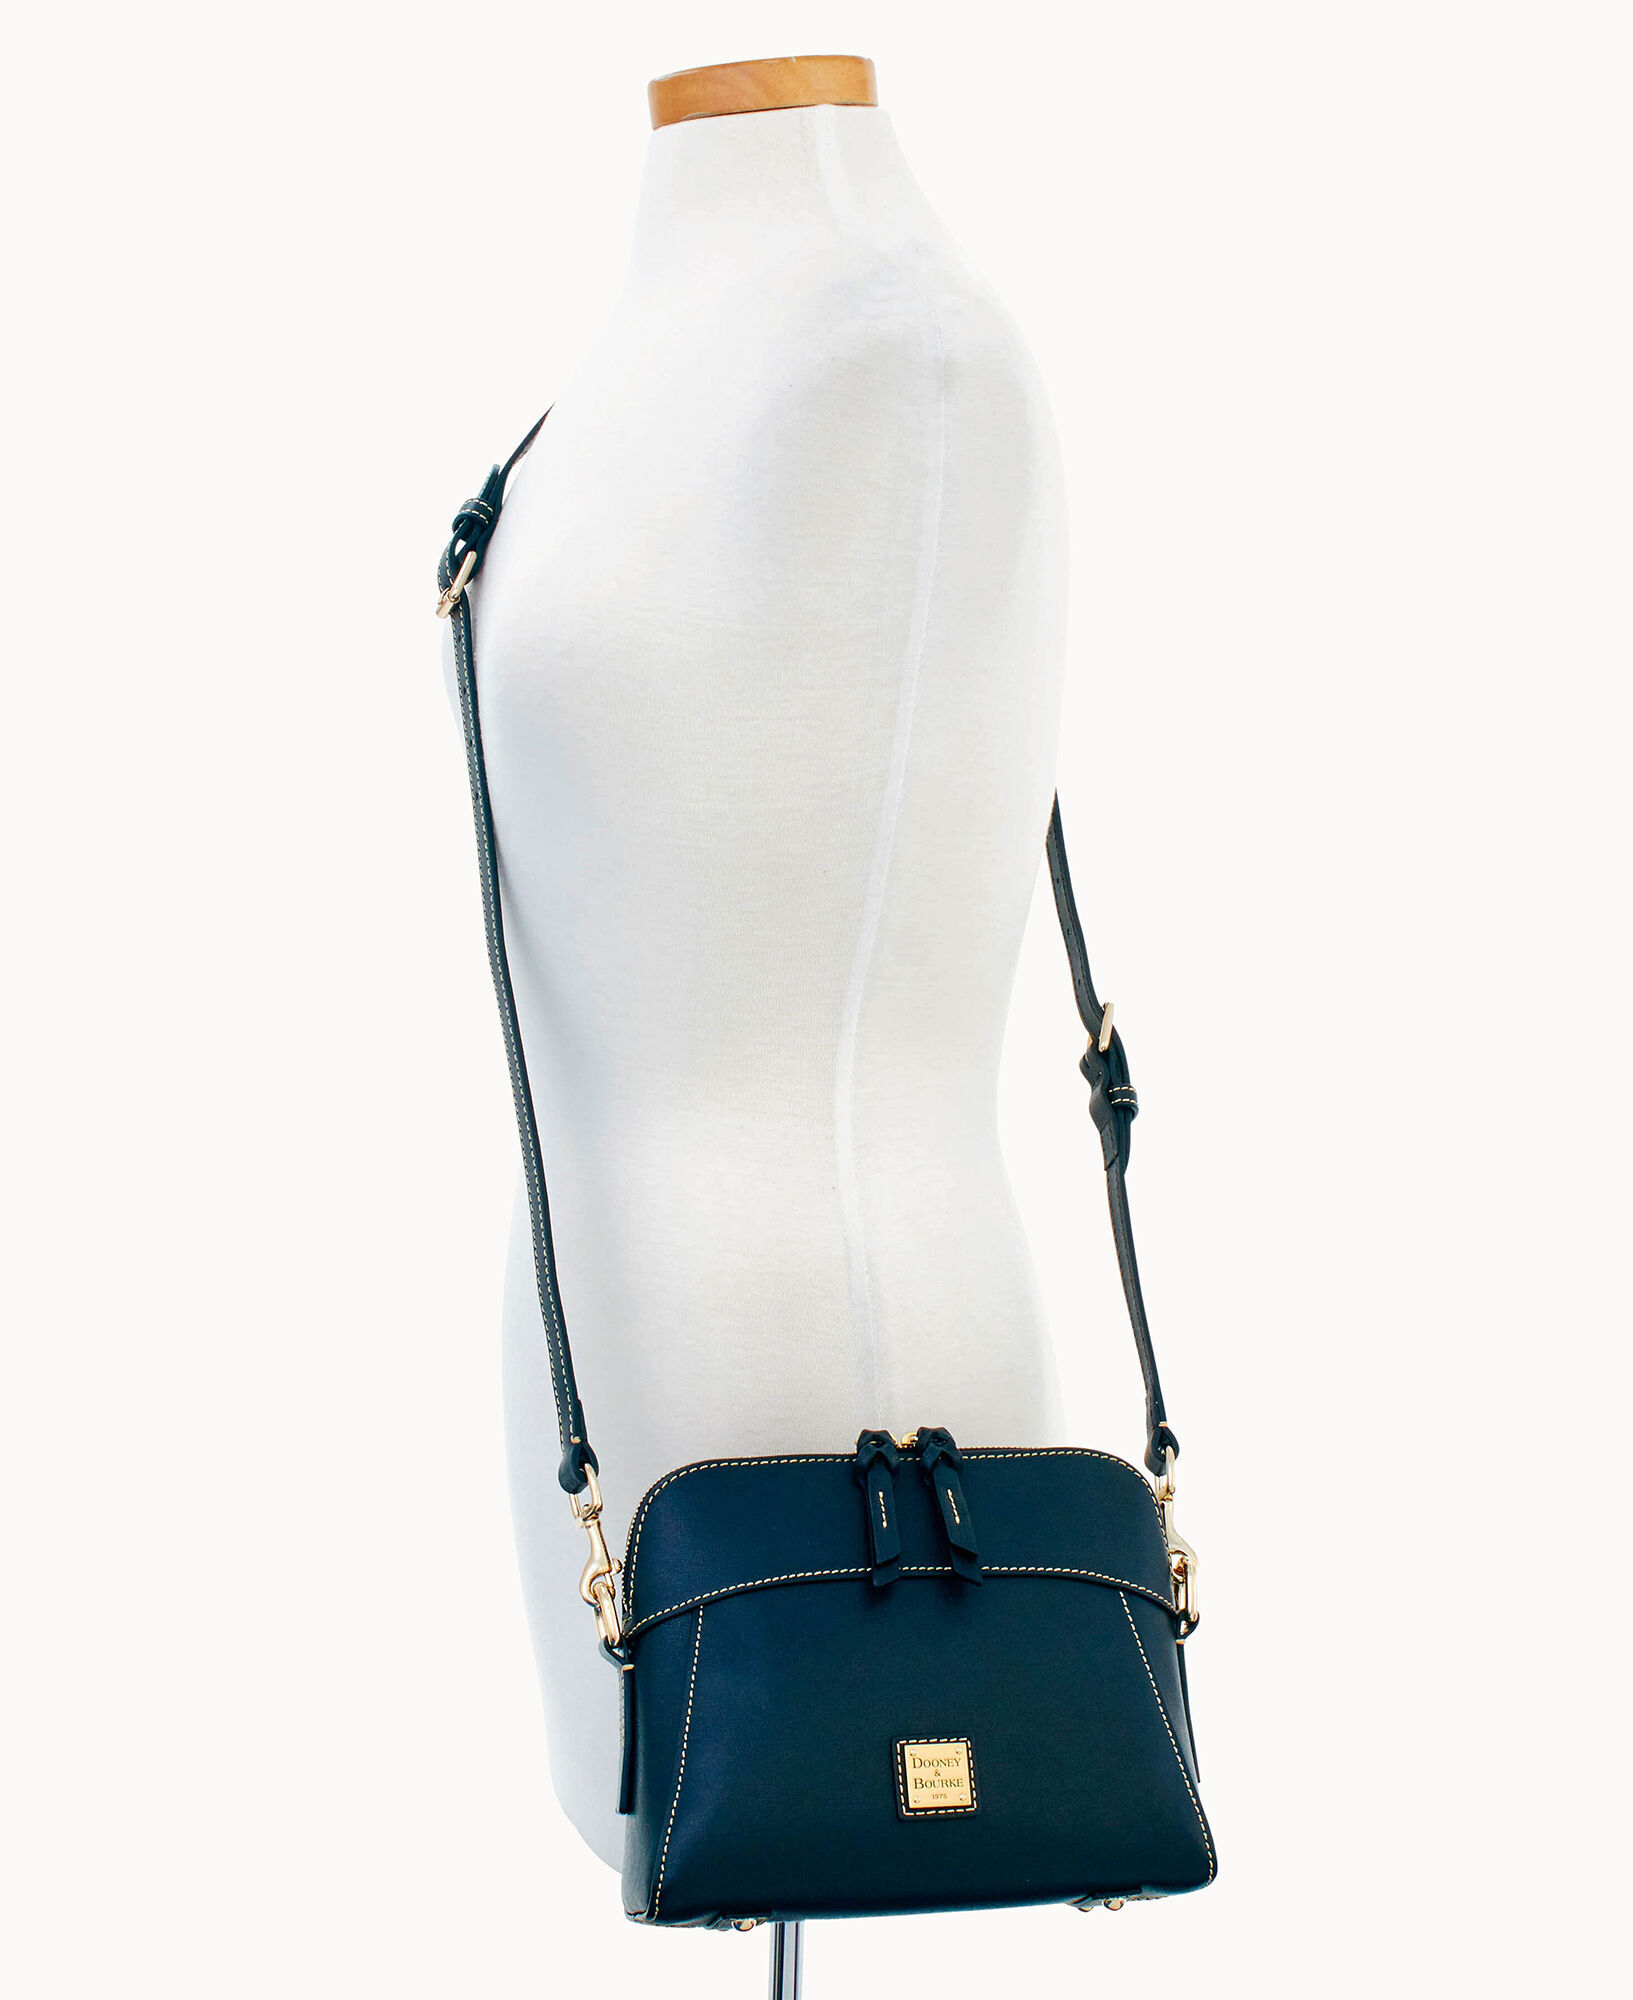 Dooney & Bourke Saffiano Small Everyday Crossbody Shoulder Bag